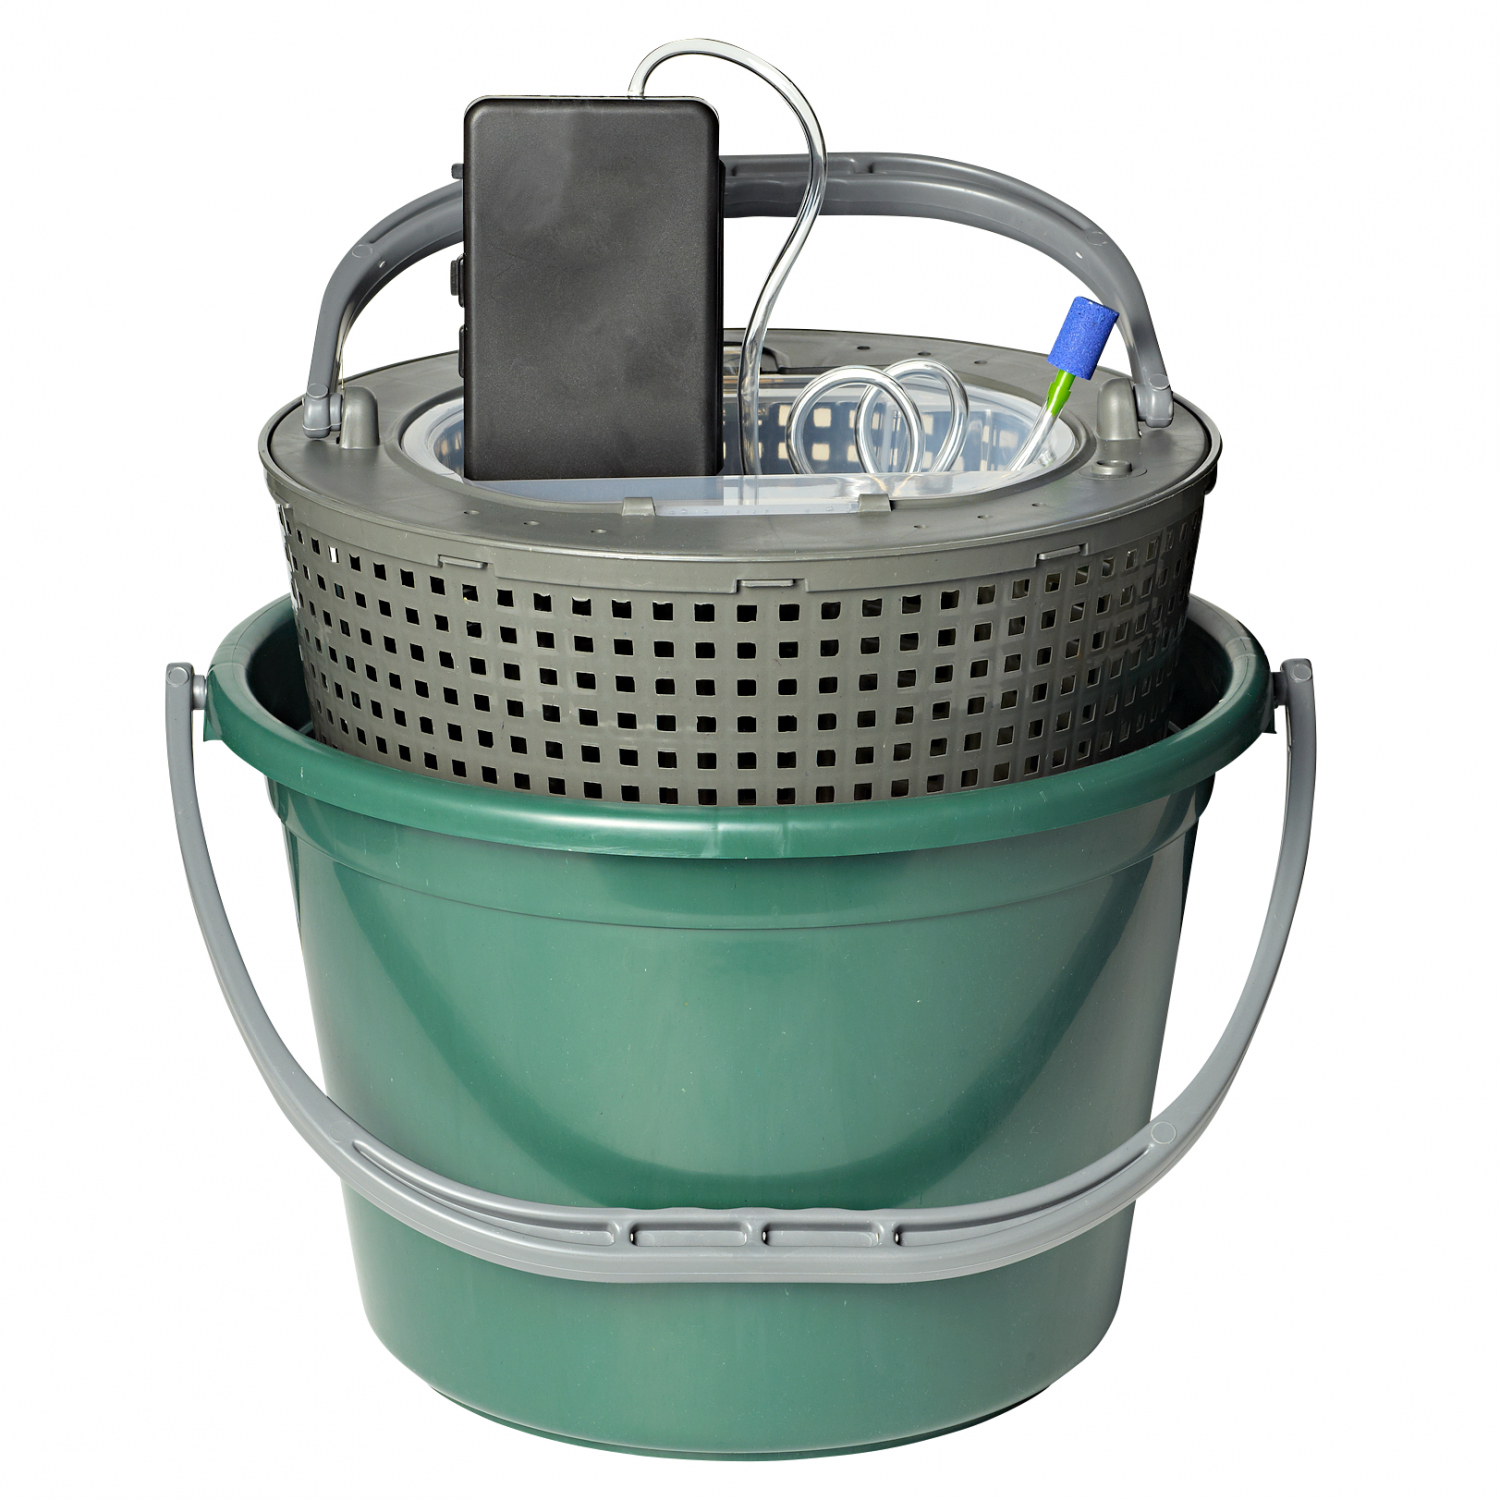 https://images.askari-sport.com/en/product/1/large/bait-fish-bucket-with-aeration-pump.jpg